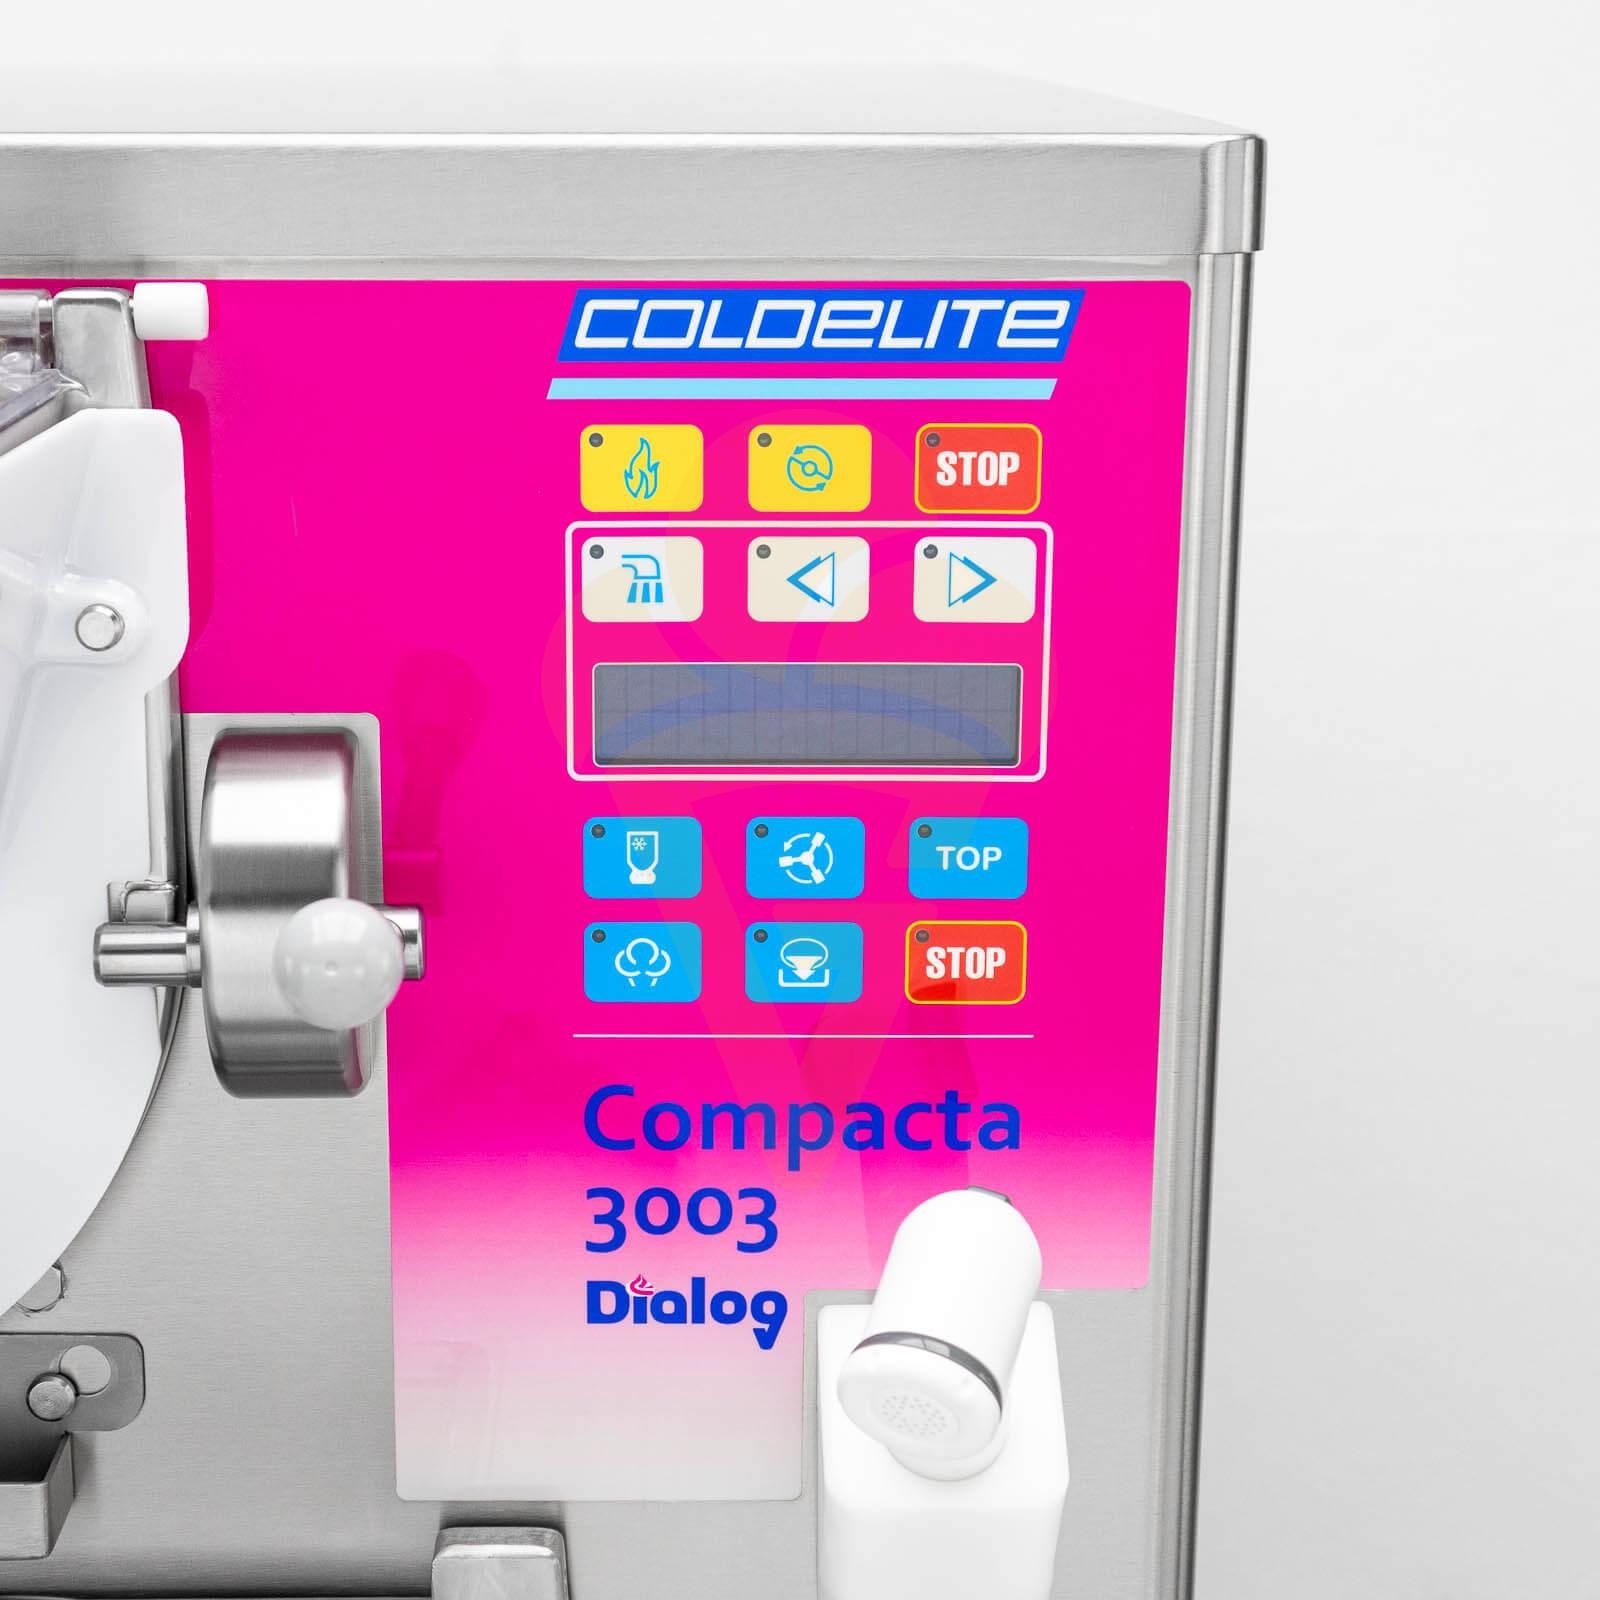 Coldelite Compacta 3003 Dialog gebraucht Display